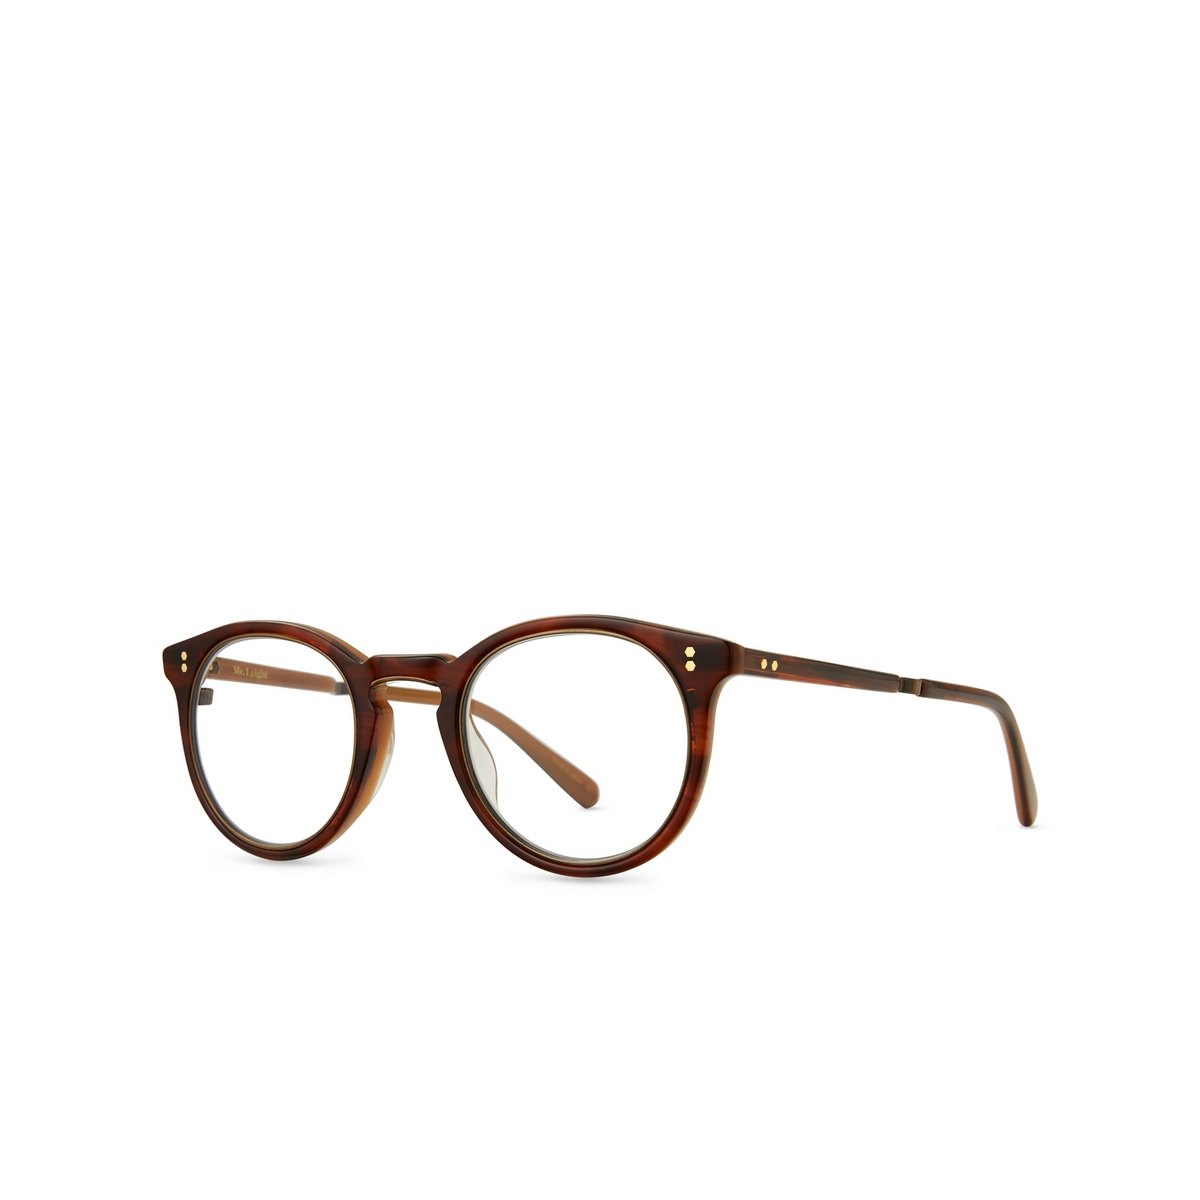 Mr. Leight CROSBY C Eyeglasses HLA-ATG Honey Laminate-Antique Gold - three-quarters view